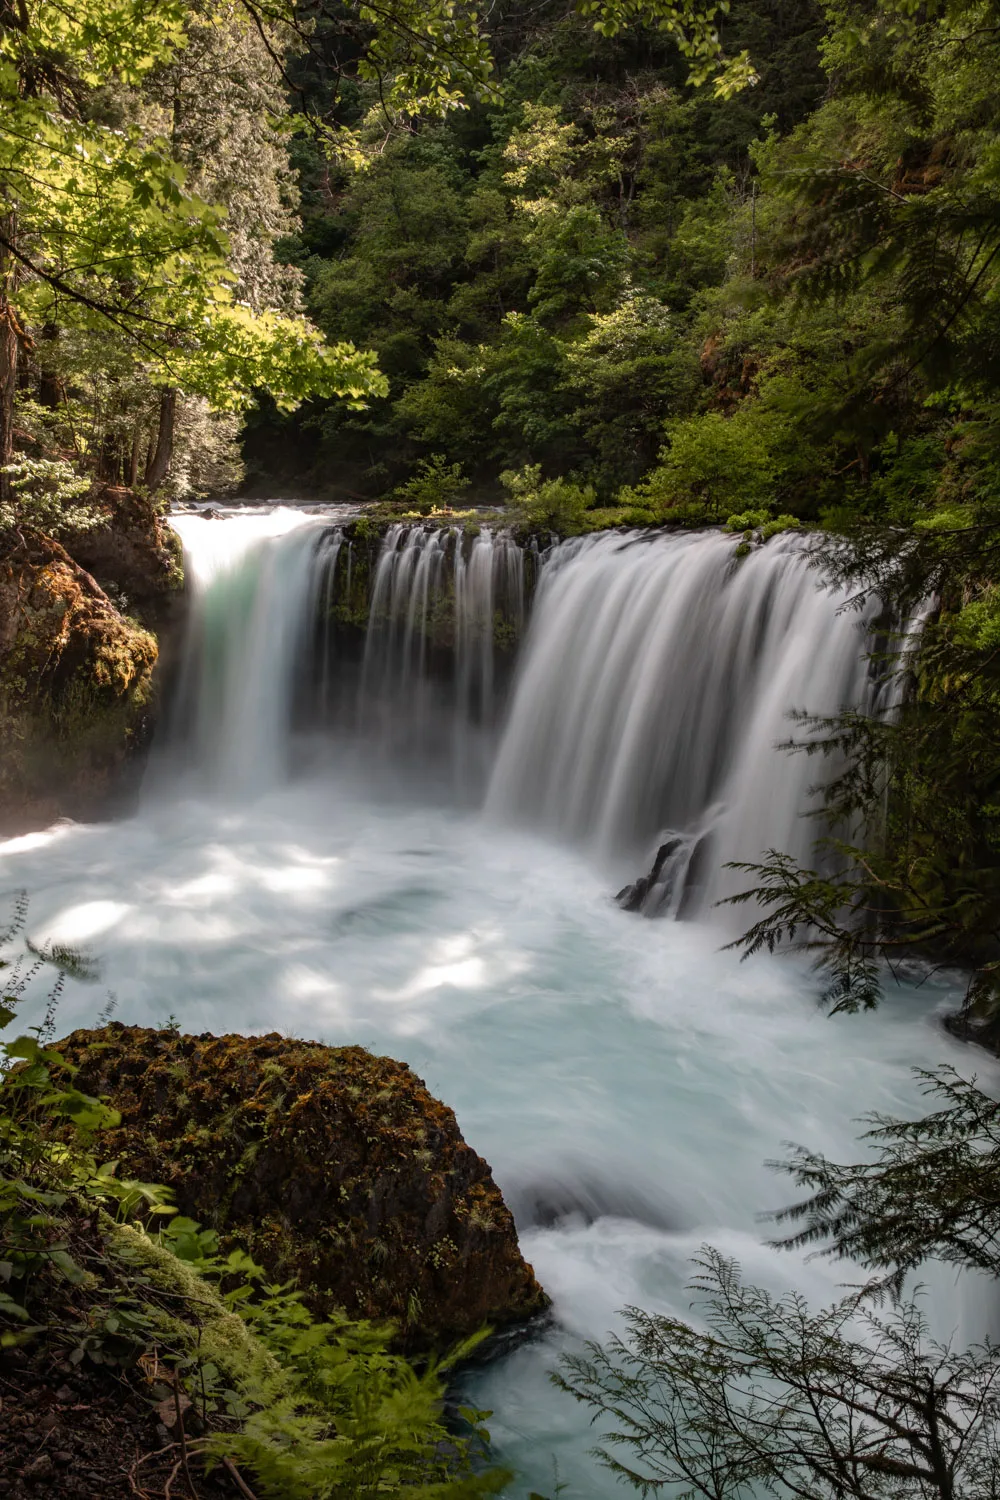 Spirit Falls Washington is one of the best waterfalls near Portland Oregon